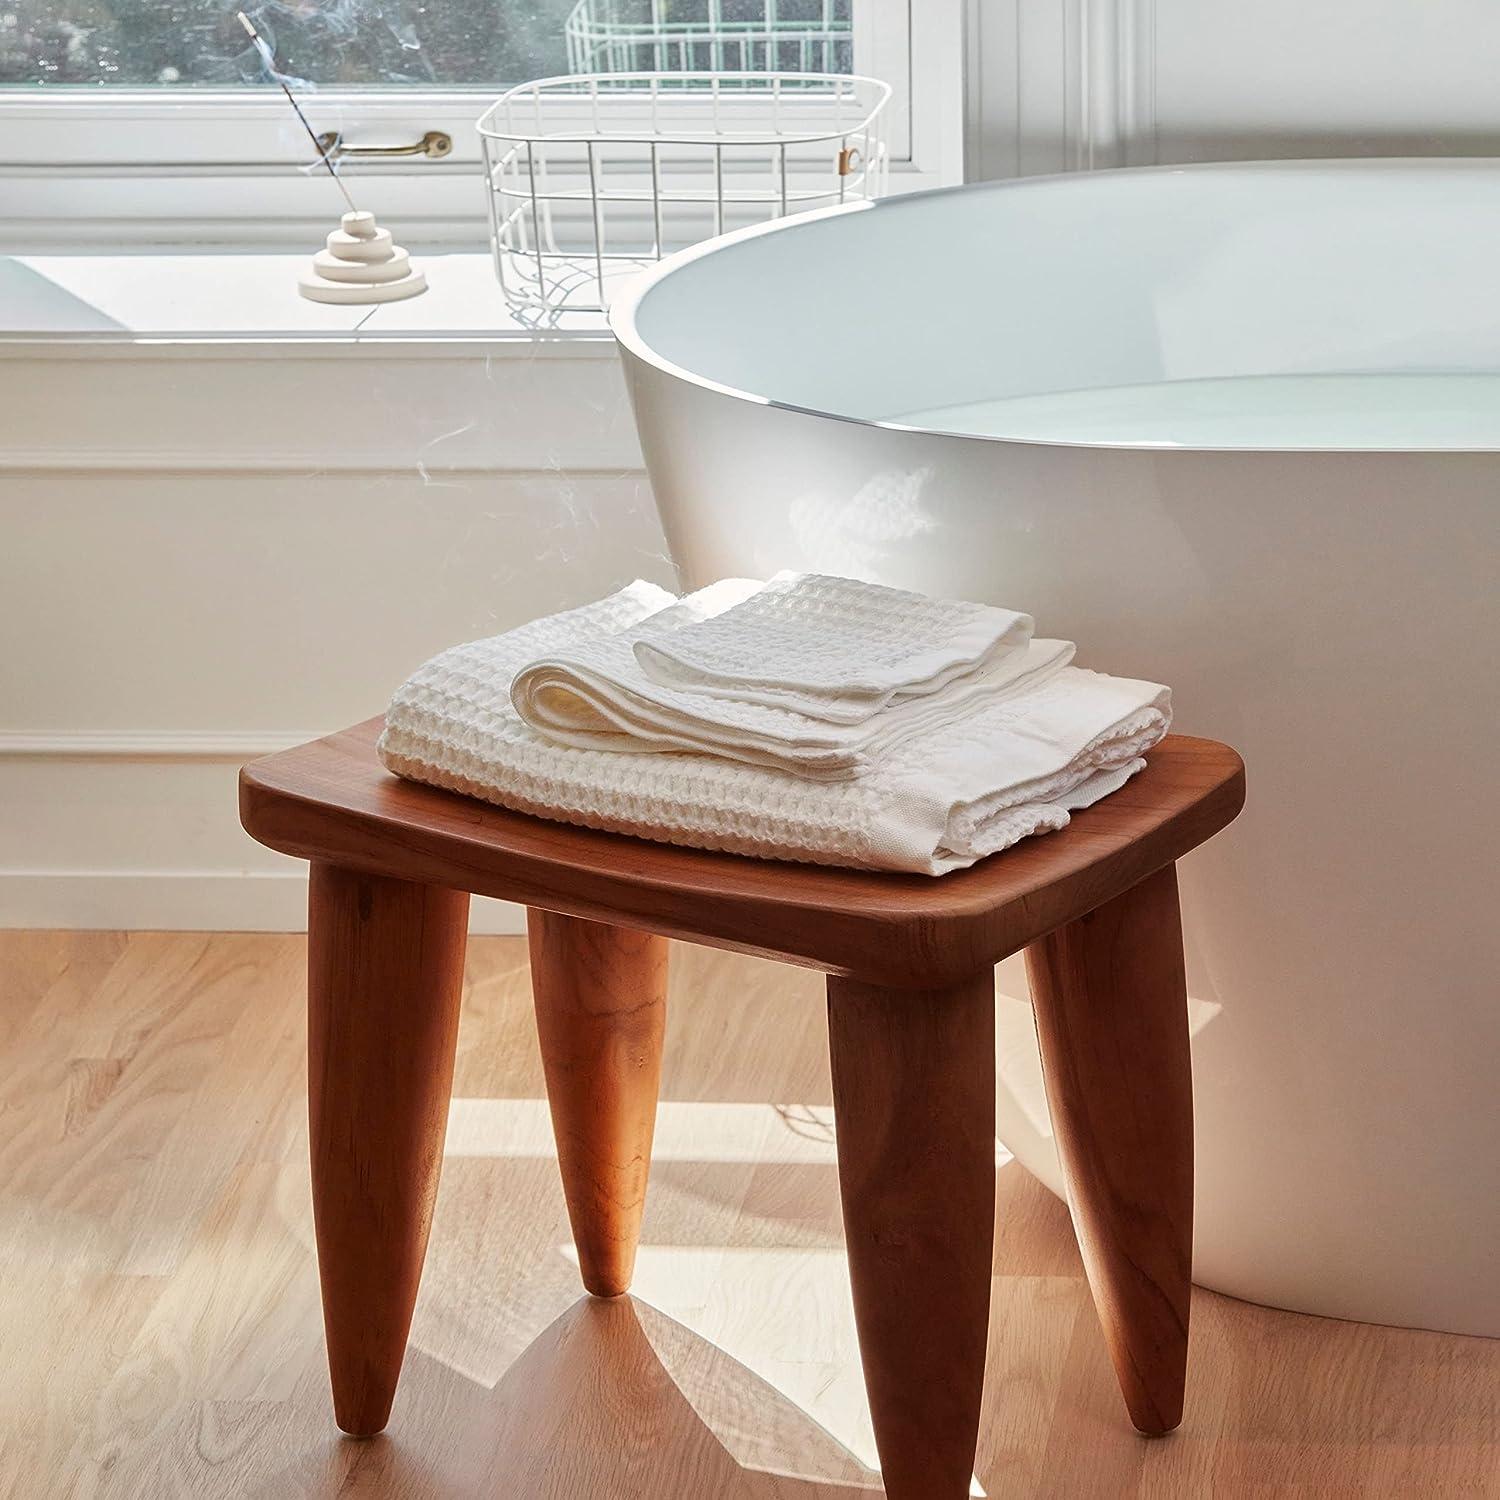 ONSEN Bath Towel Set - Waffle Weave - 3 Piece Bathroom Towel Set - 100%  Supima Cotton - Ultra